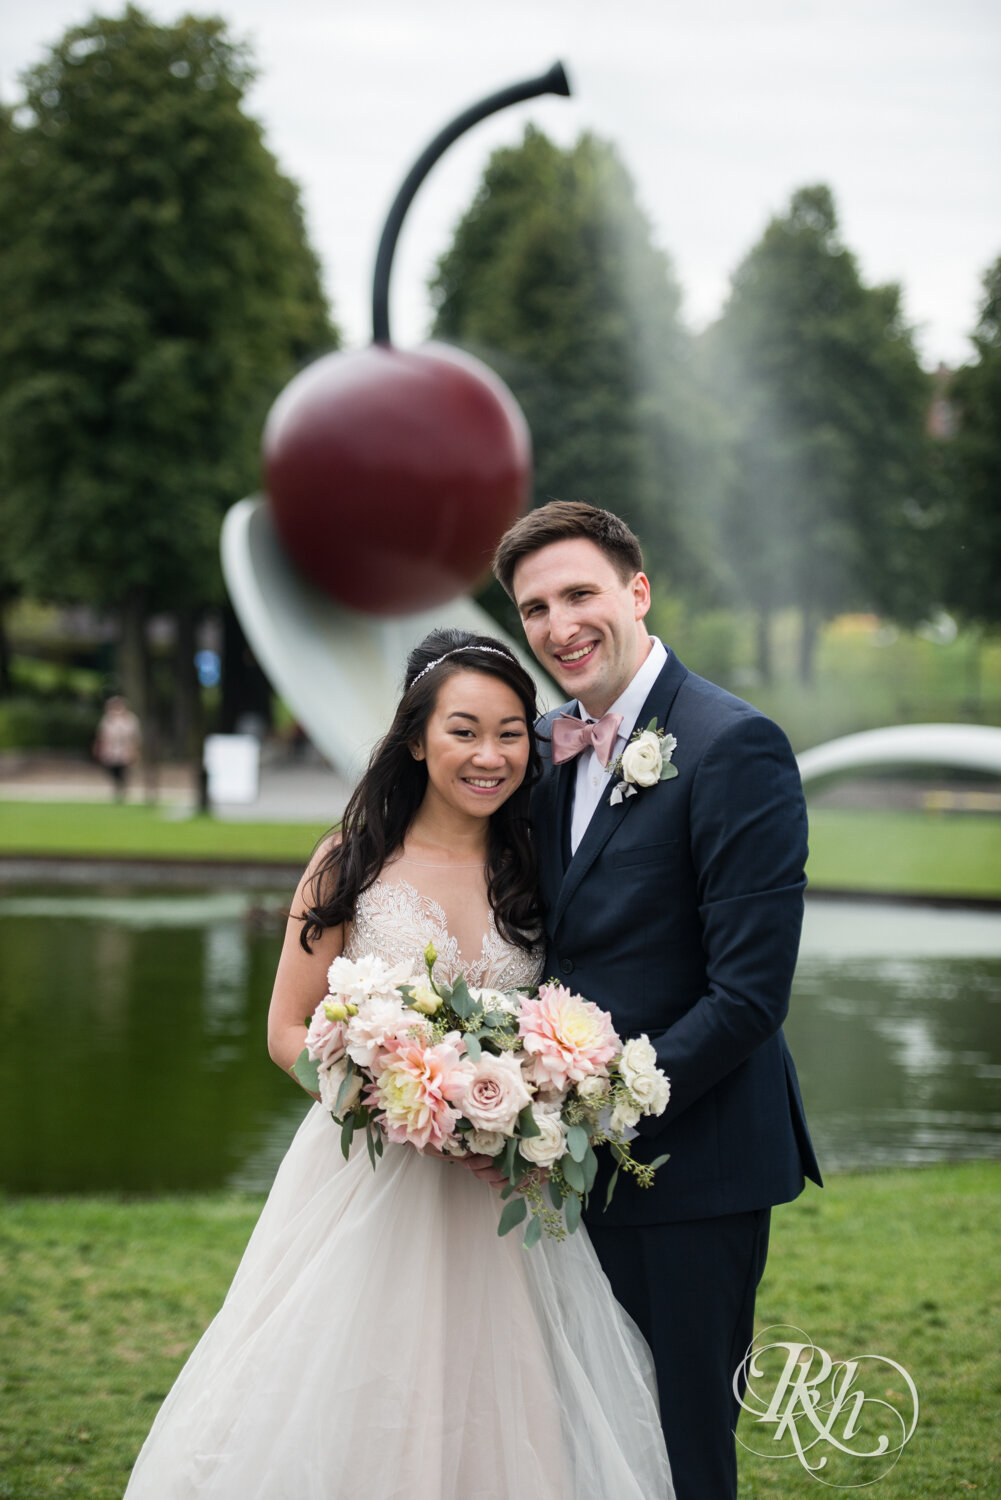 Asian bride and groom kiss in front Spoonbridge and Cherry in Sculpture Garden in Minneapolis, Minnesota.